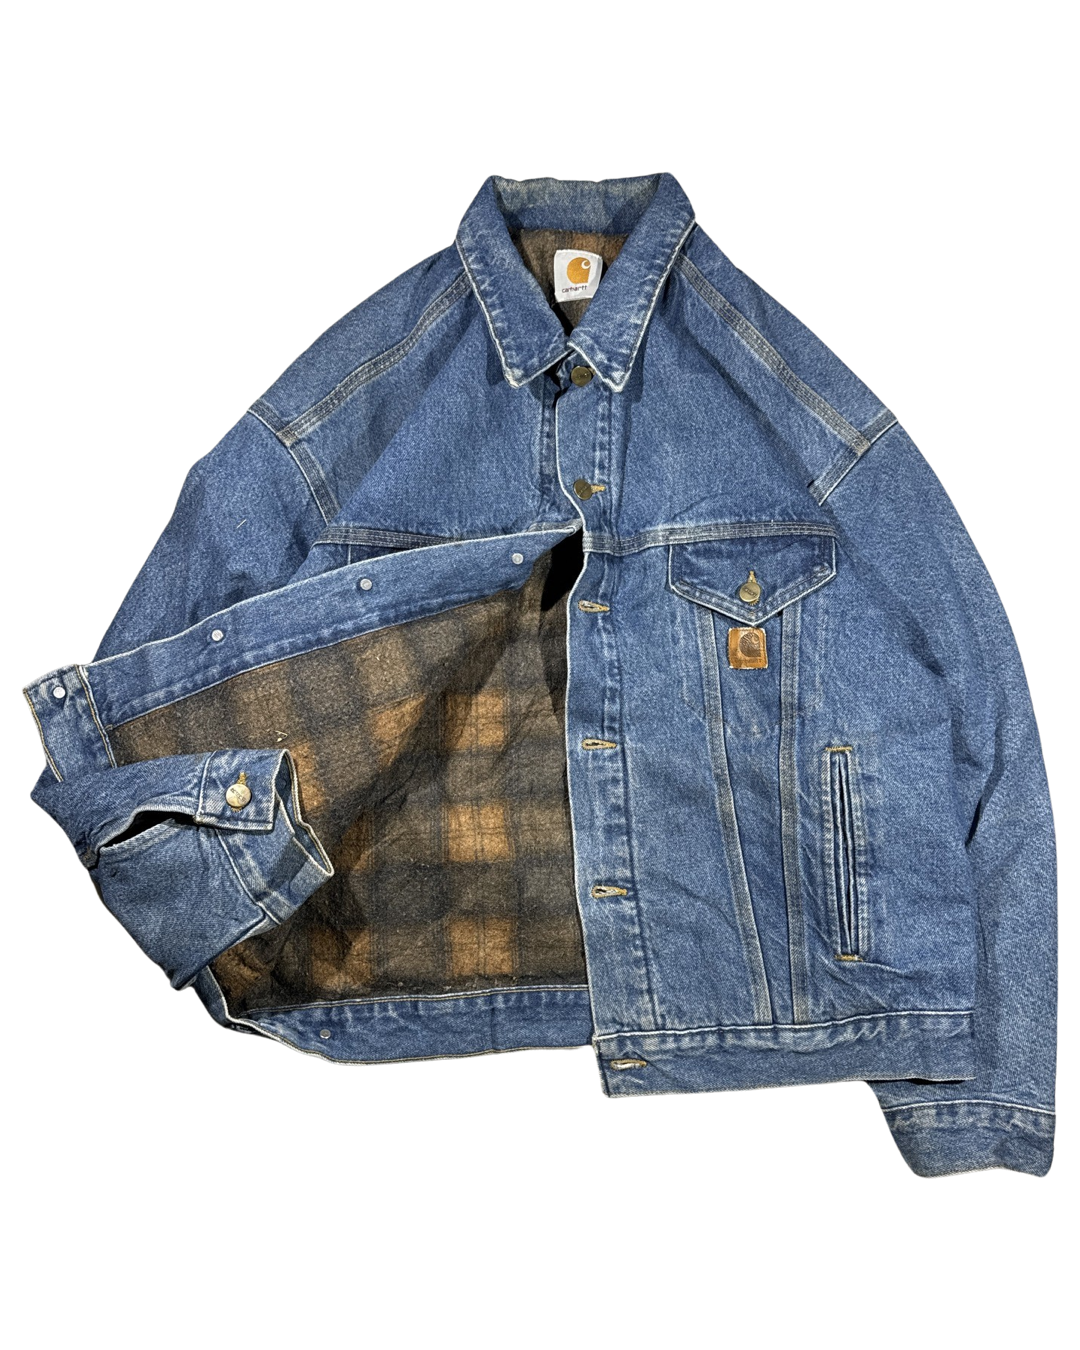 Vintage Carhartt Jacket - L